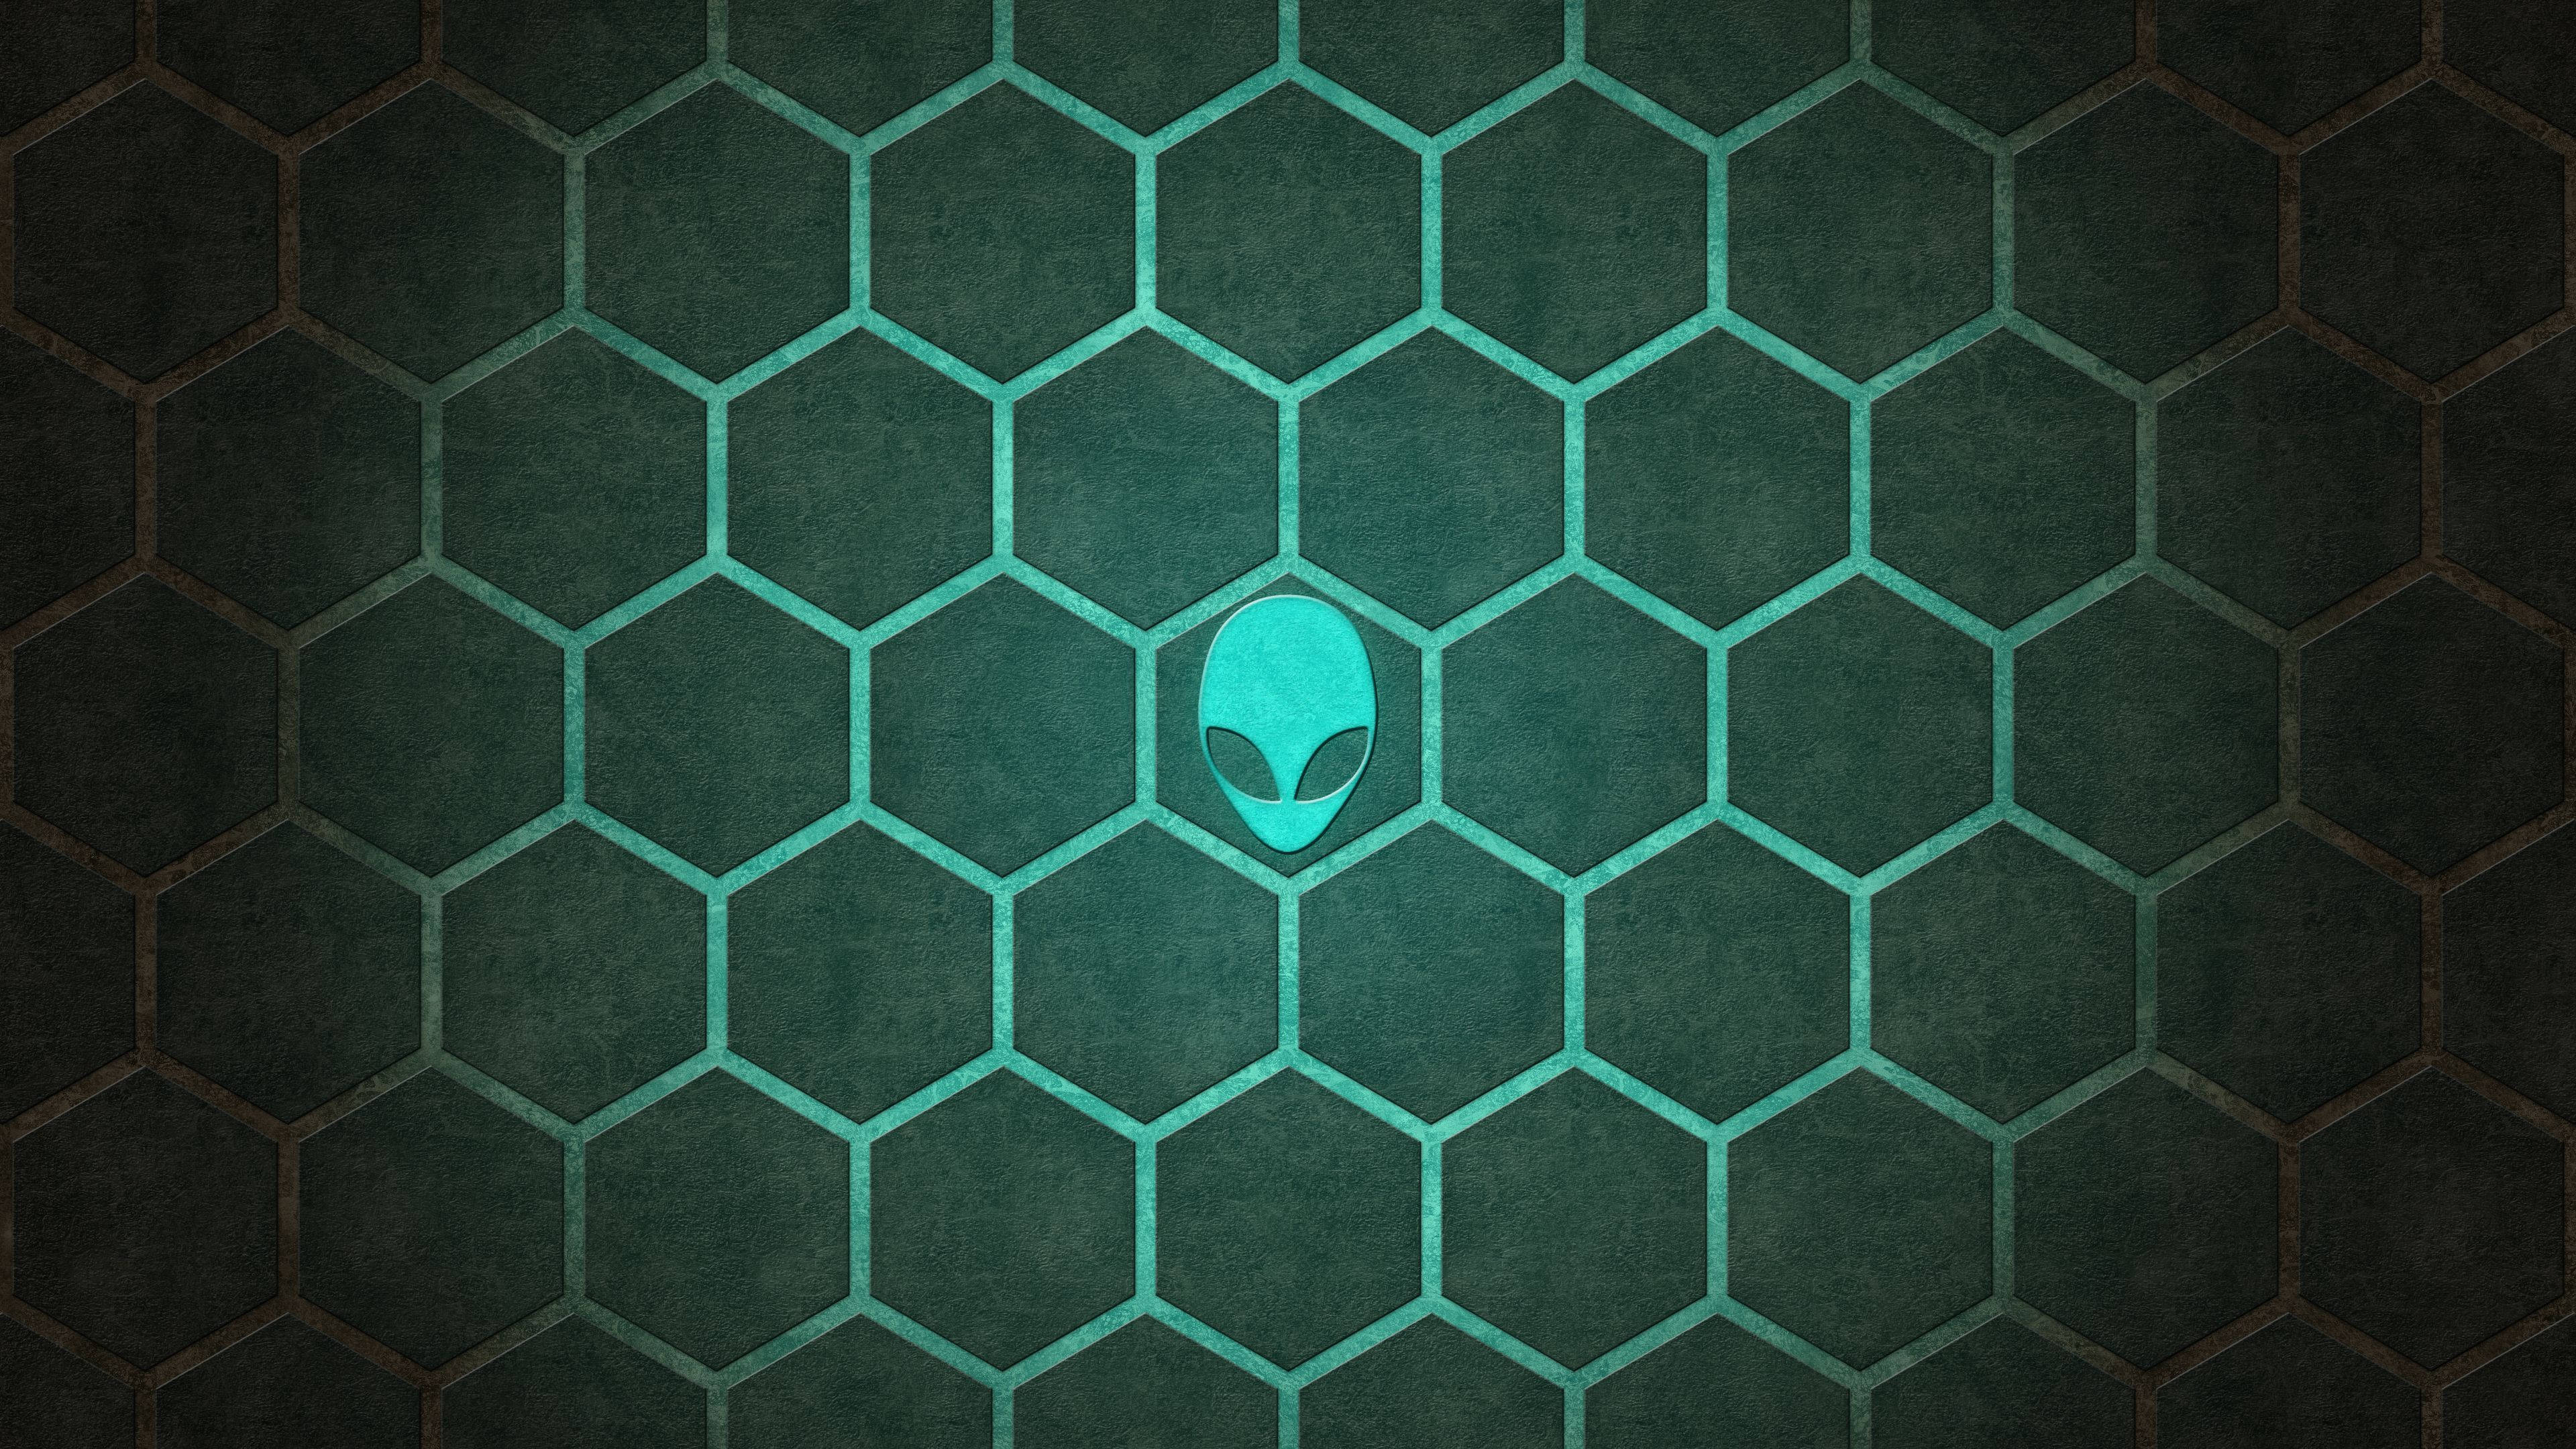 alienware wallpaper hd green